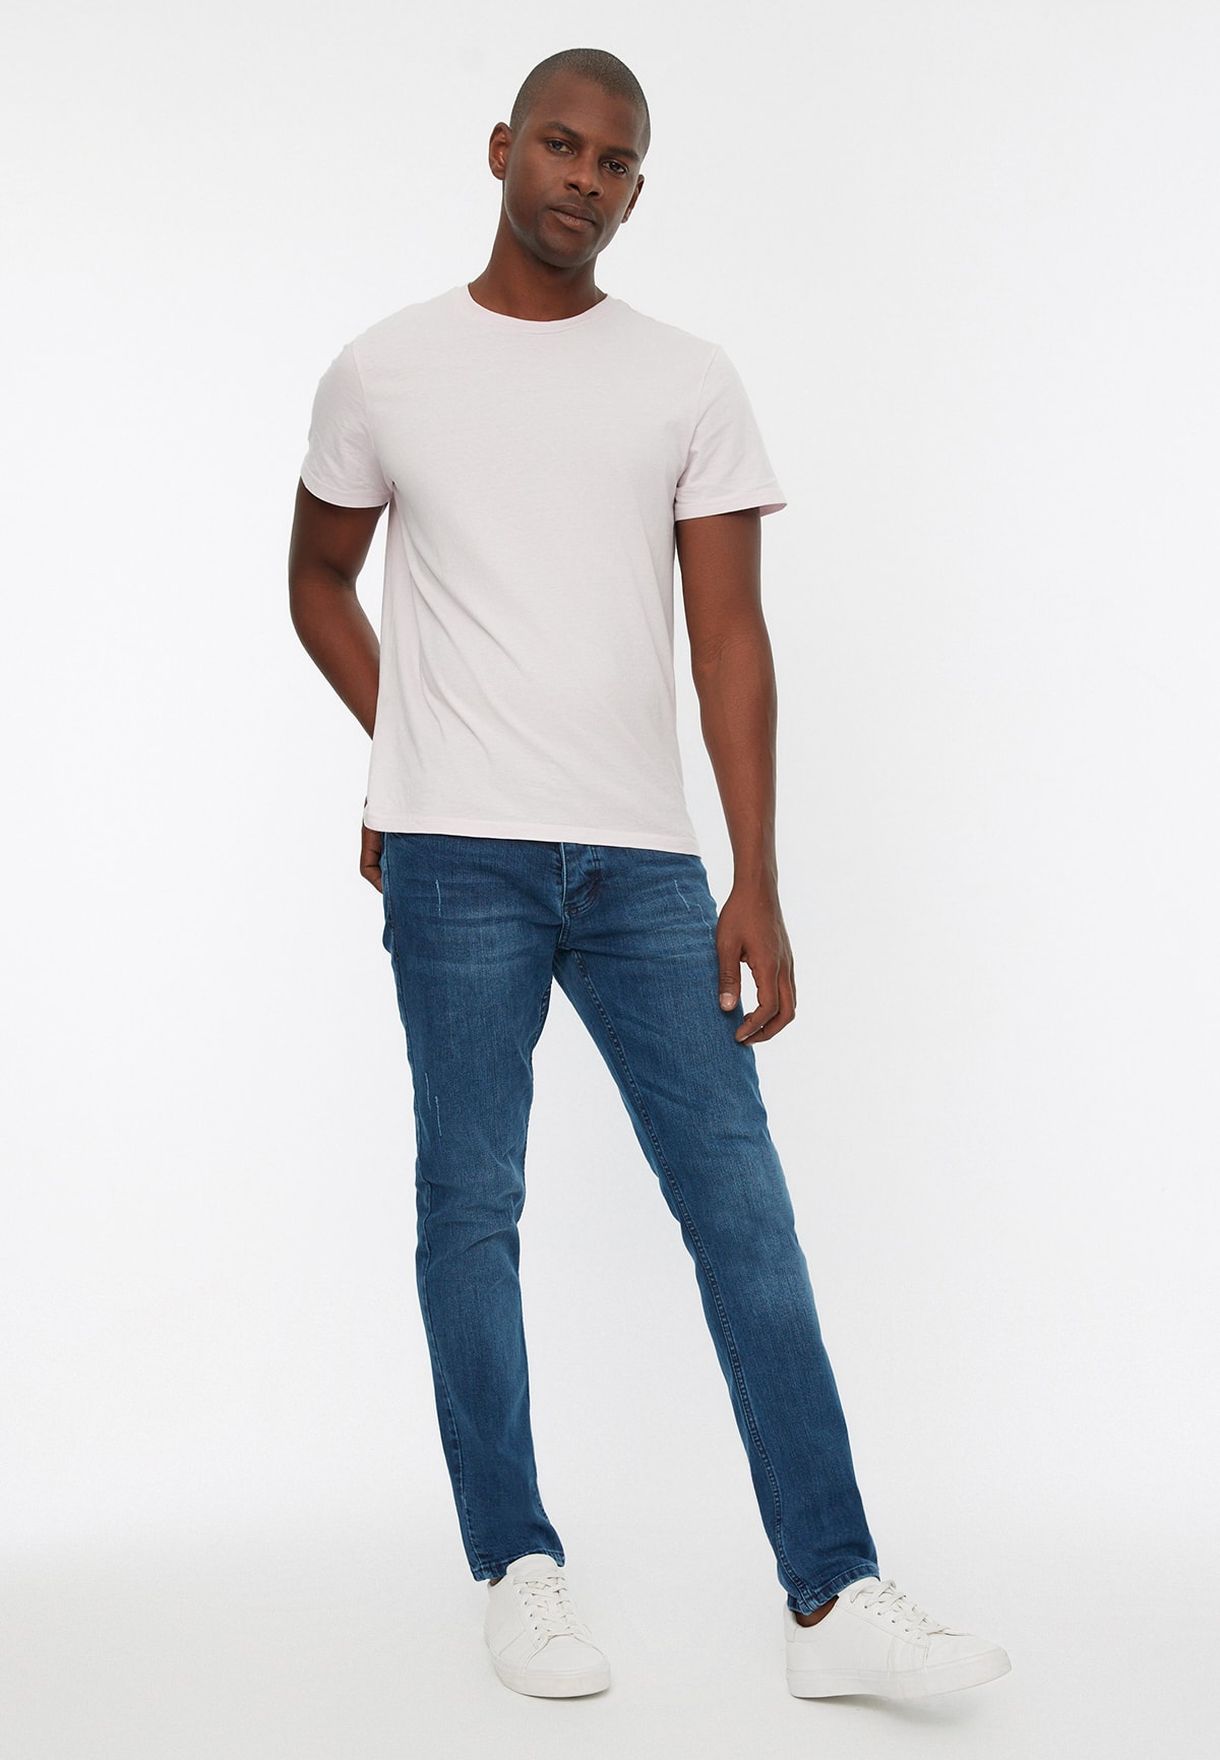 blue distressed skinny jeans mens